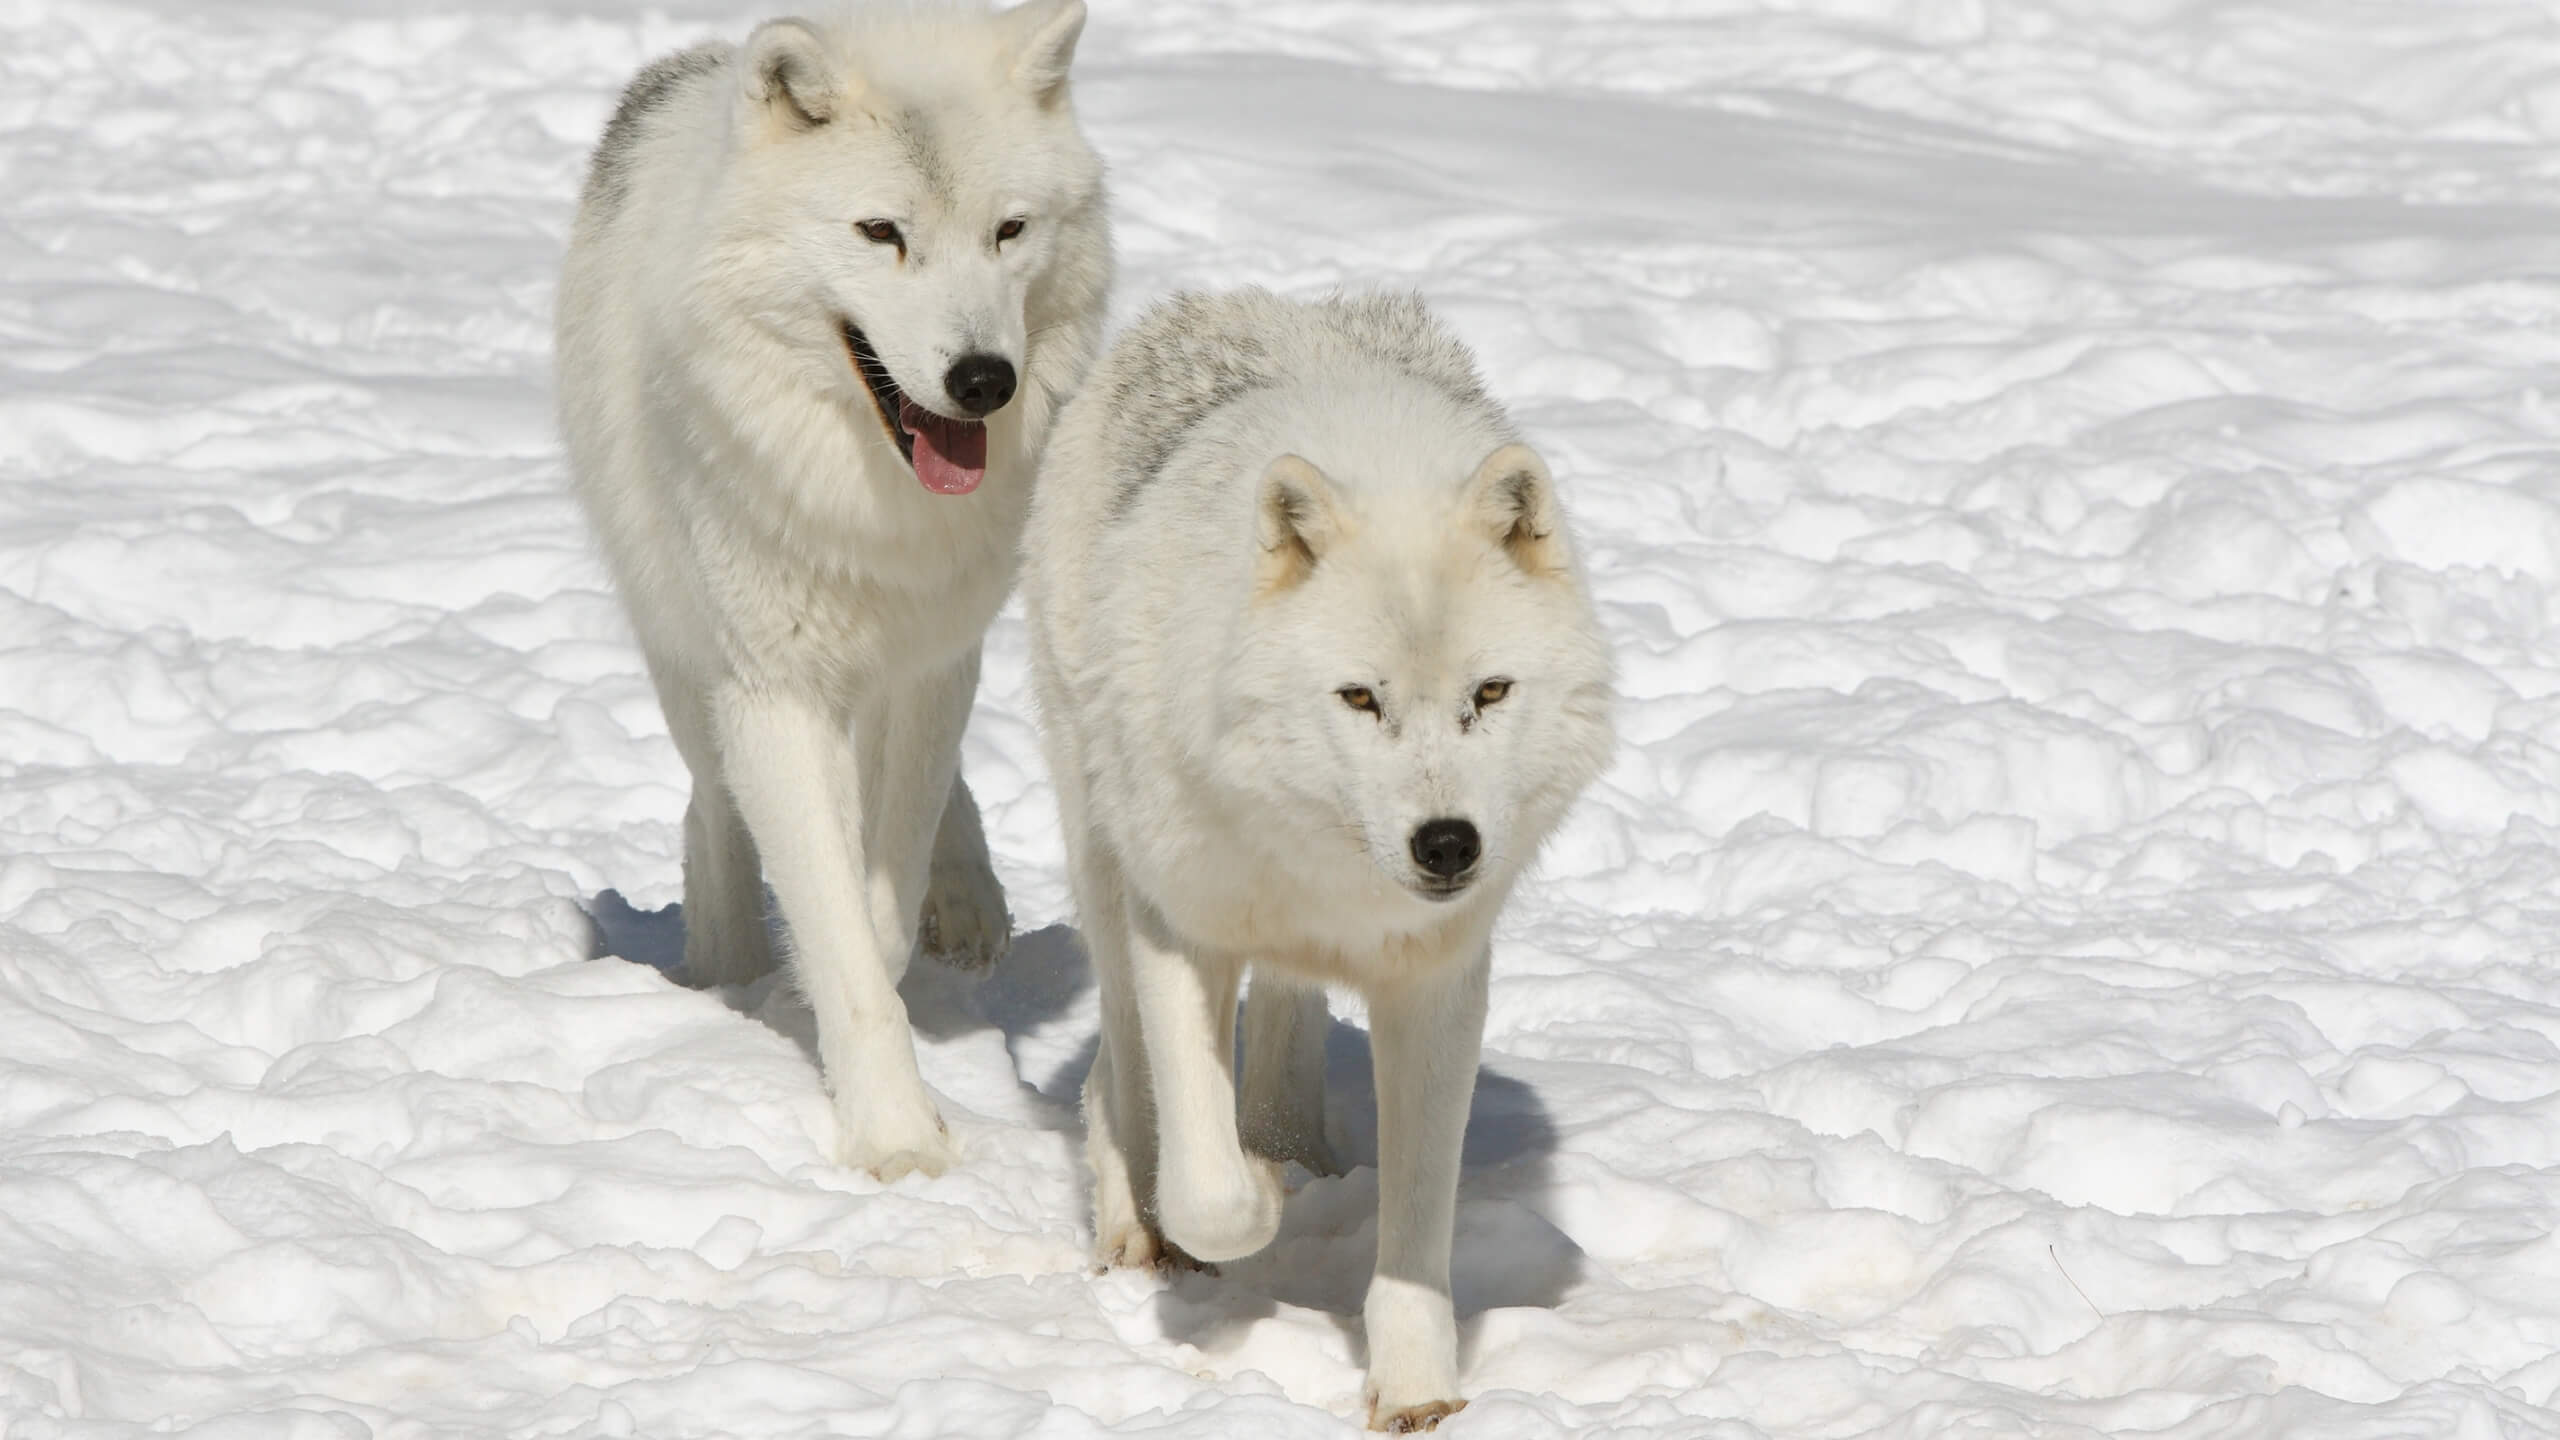 arctic-wolf-3